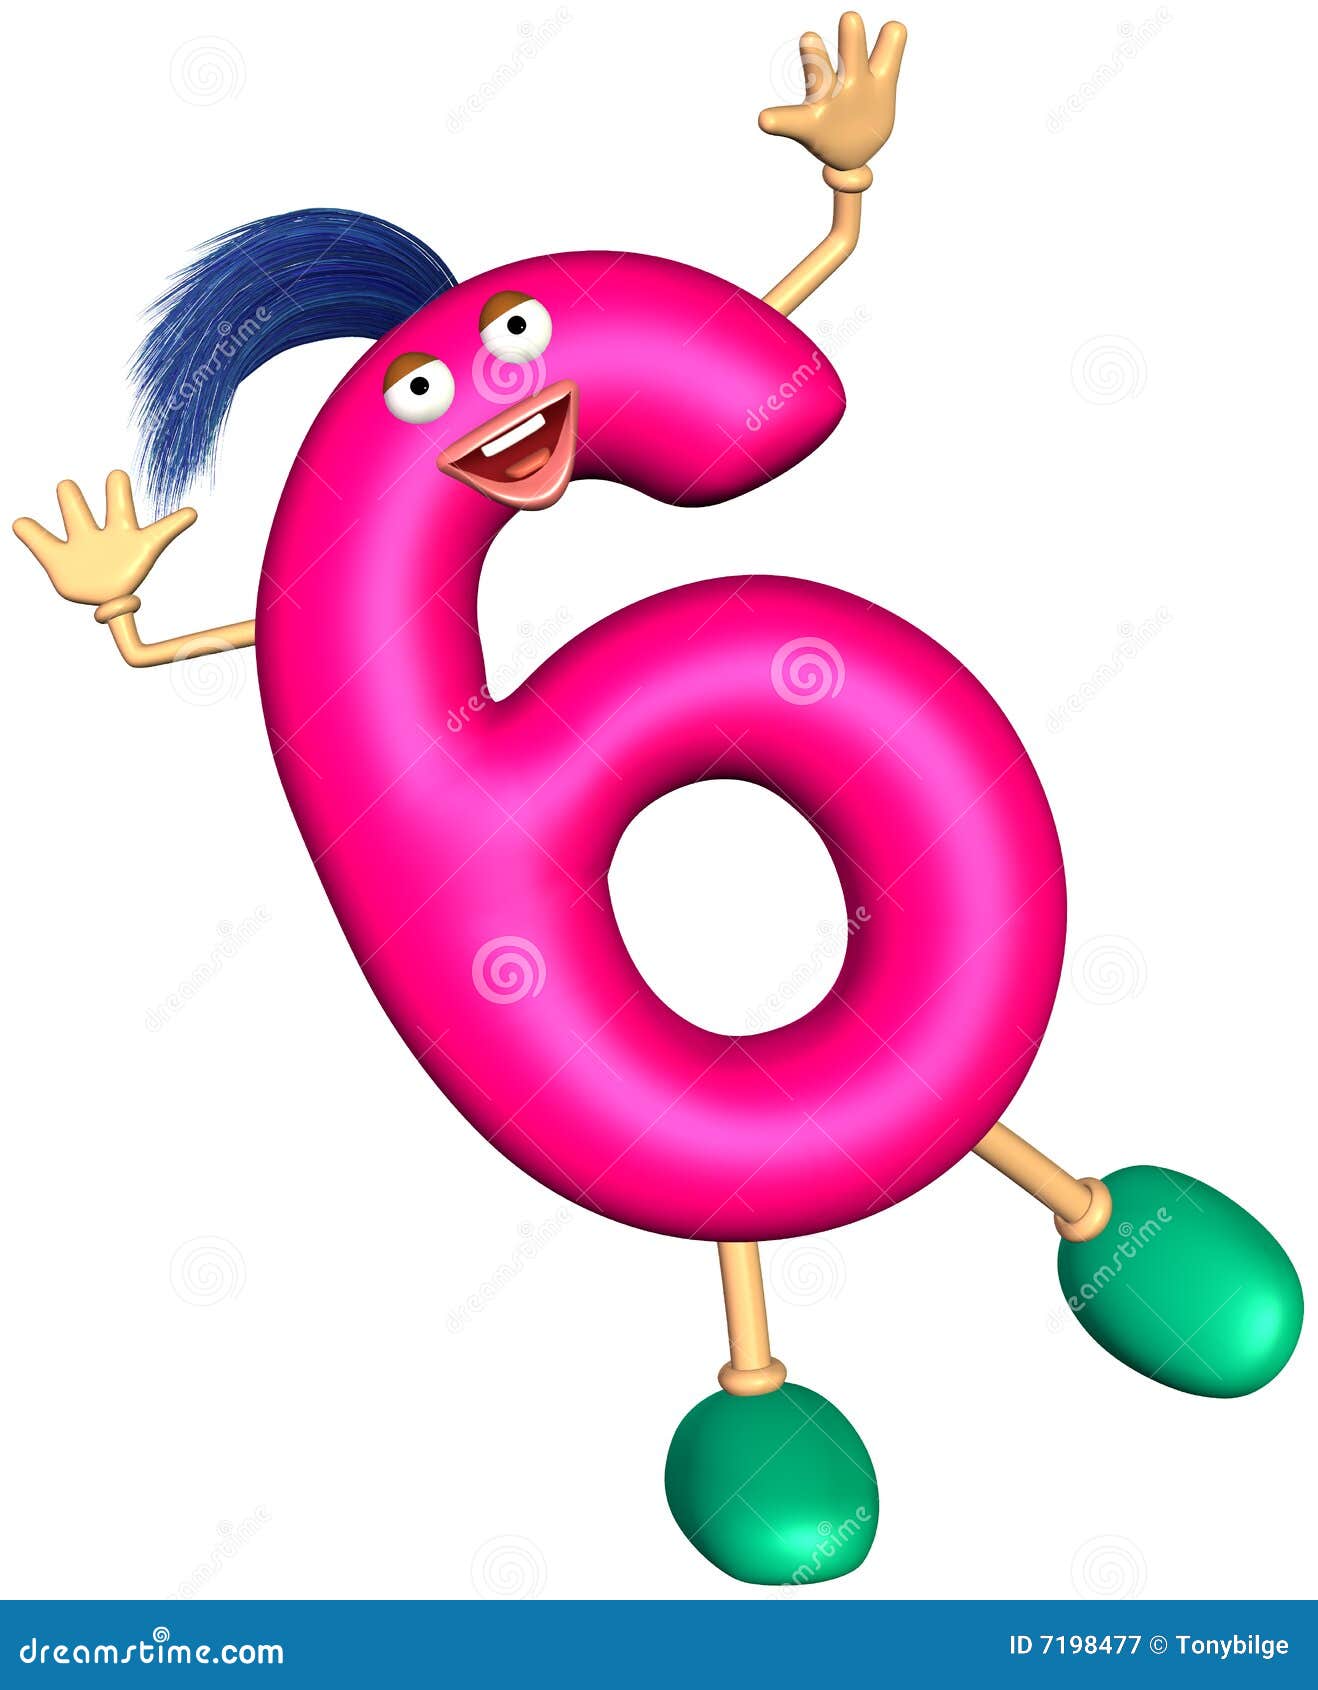 digit character of six